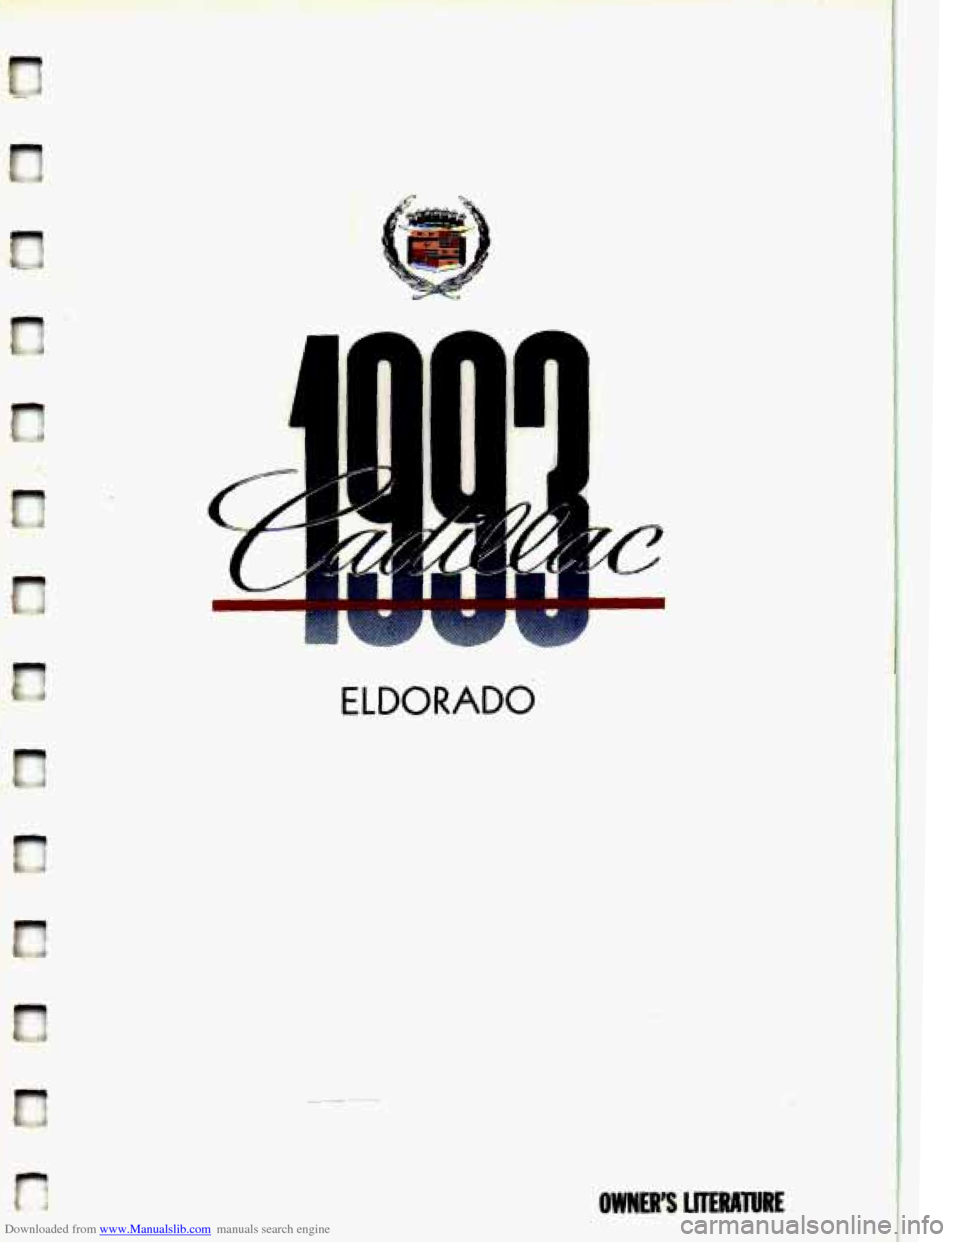 CADILLAC ELDORADO 1993 10.G Owners Manual Downloaded from www.Manualslib.com manuals search engine ELDORADO 
OWNERS LlIERATURE   